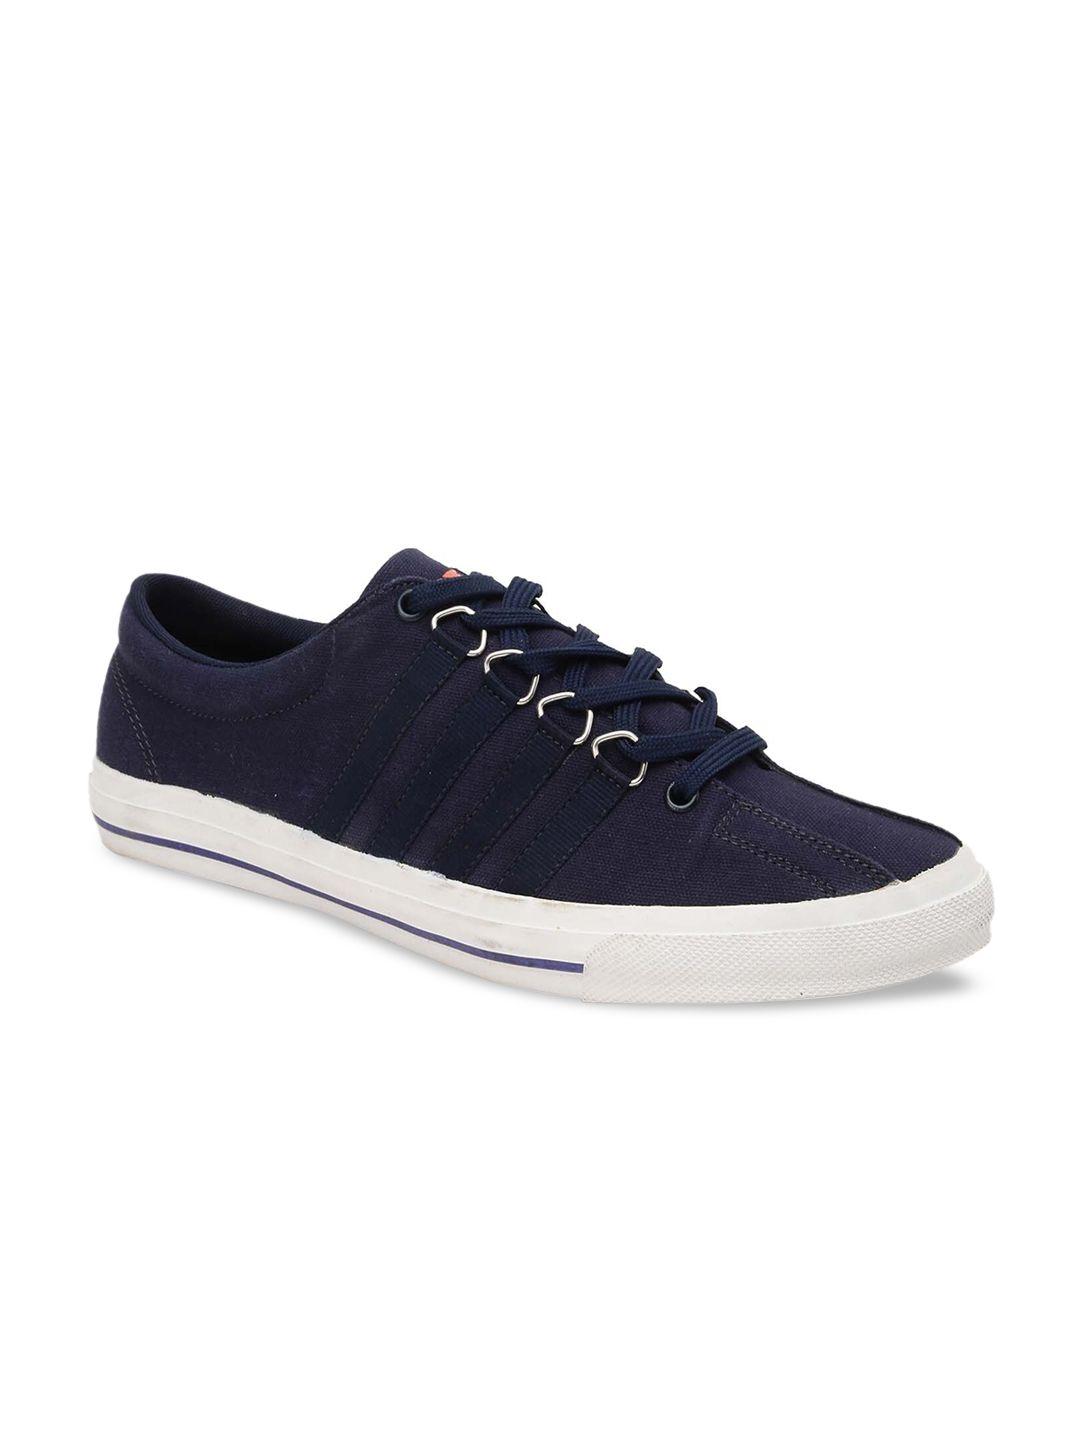 paragon-men-navy-blue-sneakers